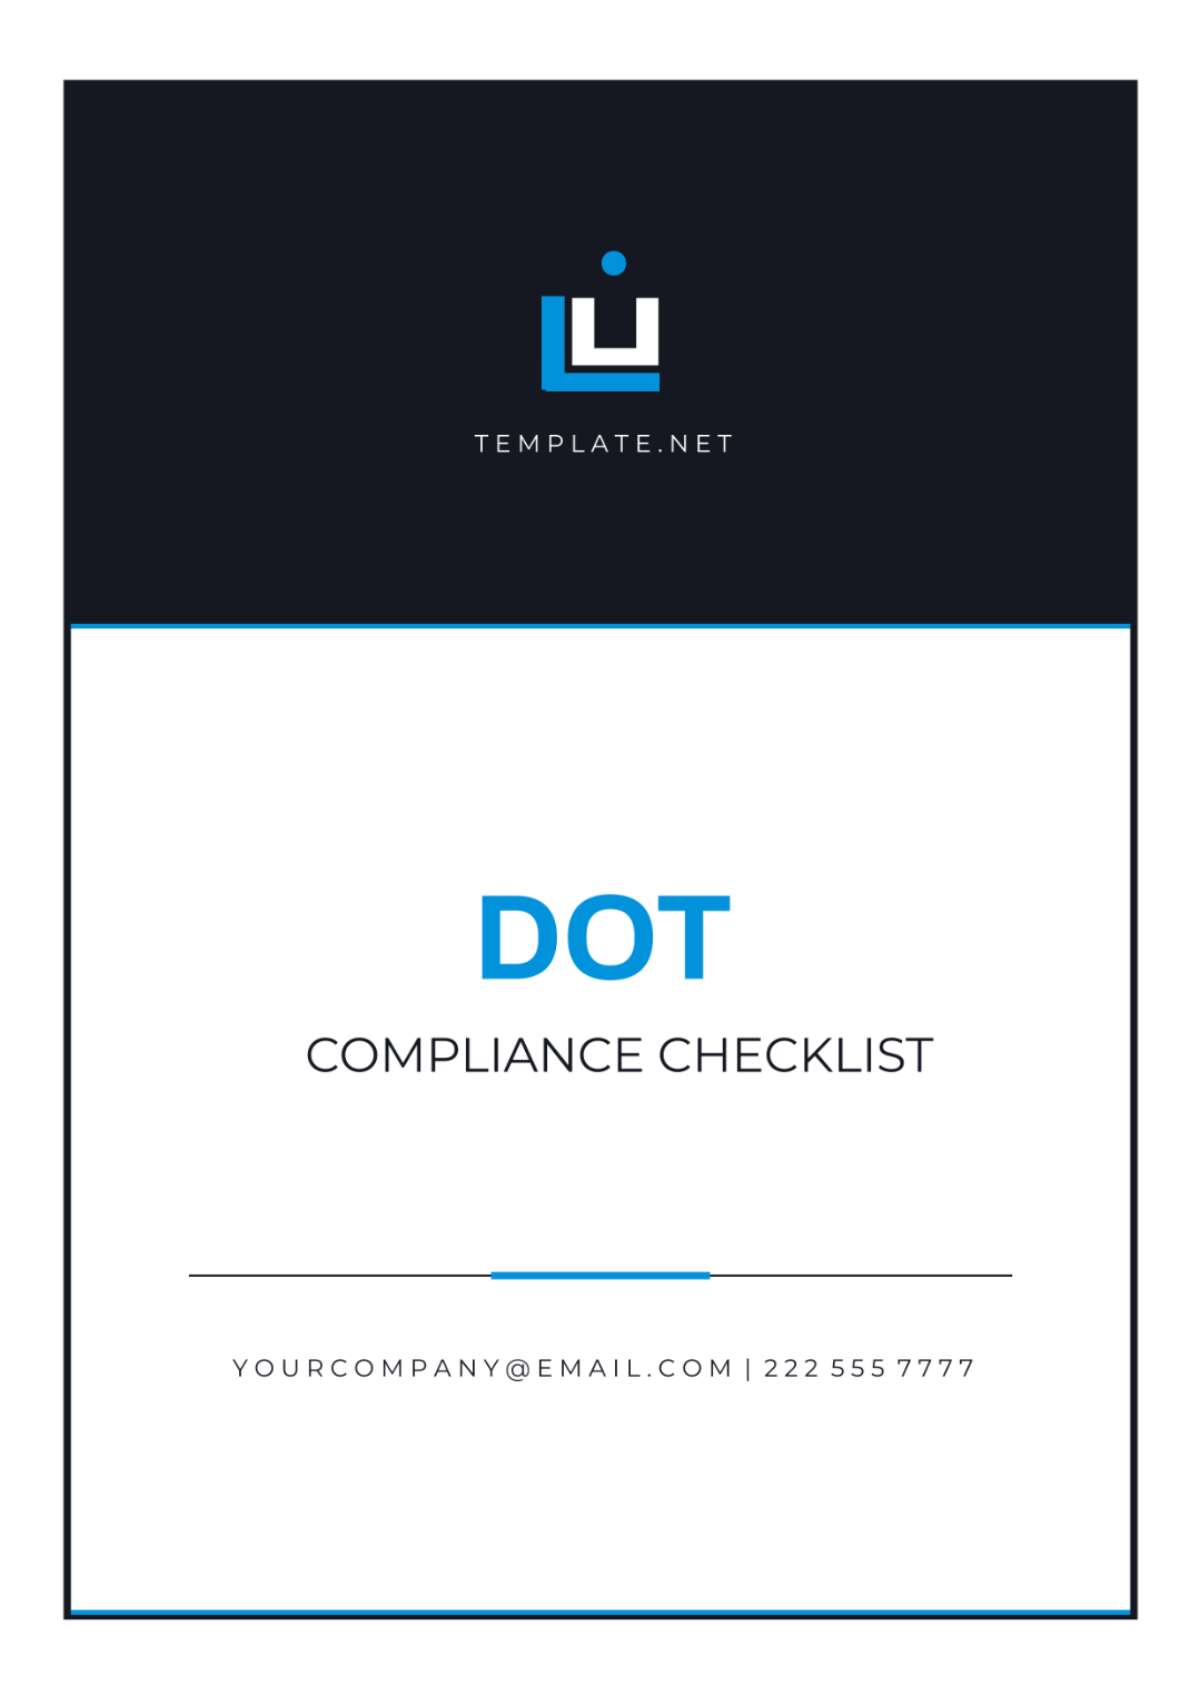 DOT Compliance Checklist Template